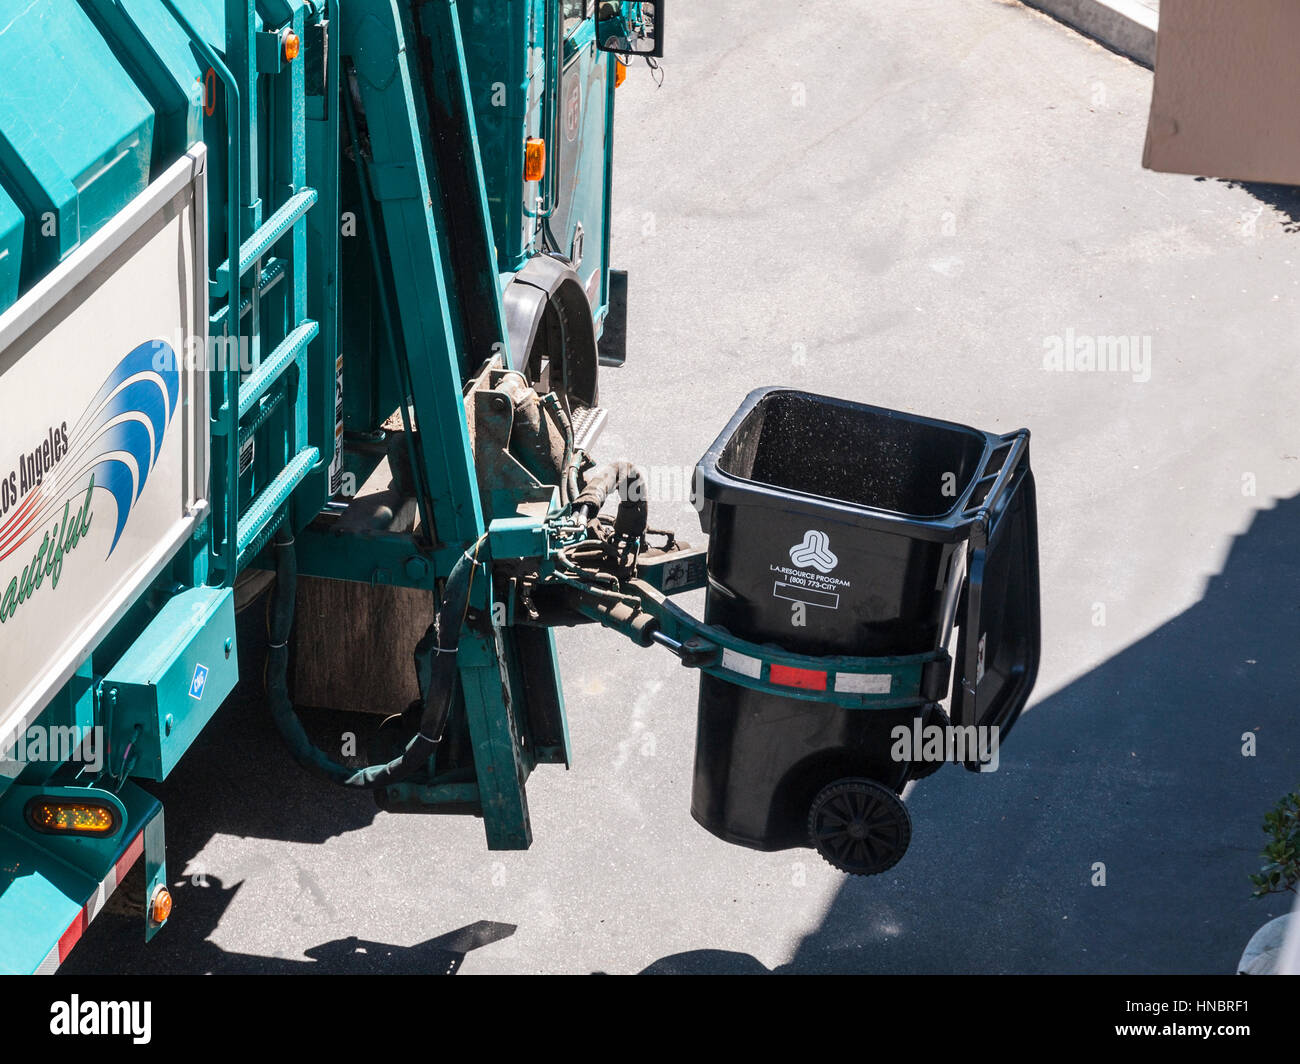 Los Angeles, Kalifornien, USA - 13. Juli 2010: City of Los Angeles Department of Sanitation automatisierte Müll LKW Arm bei der Arbeit. Stockfoto